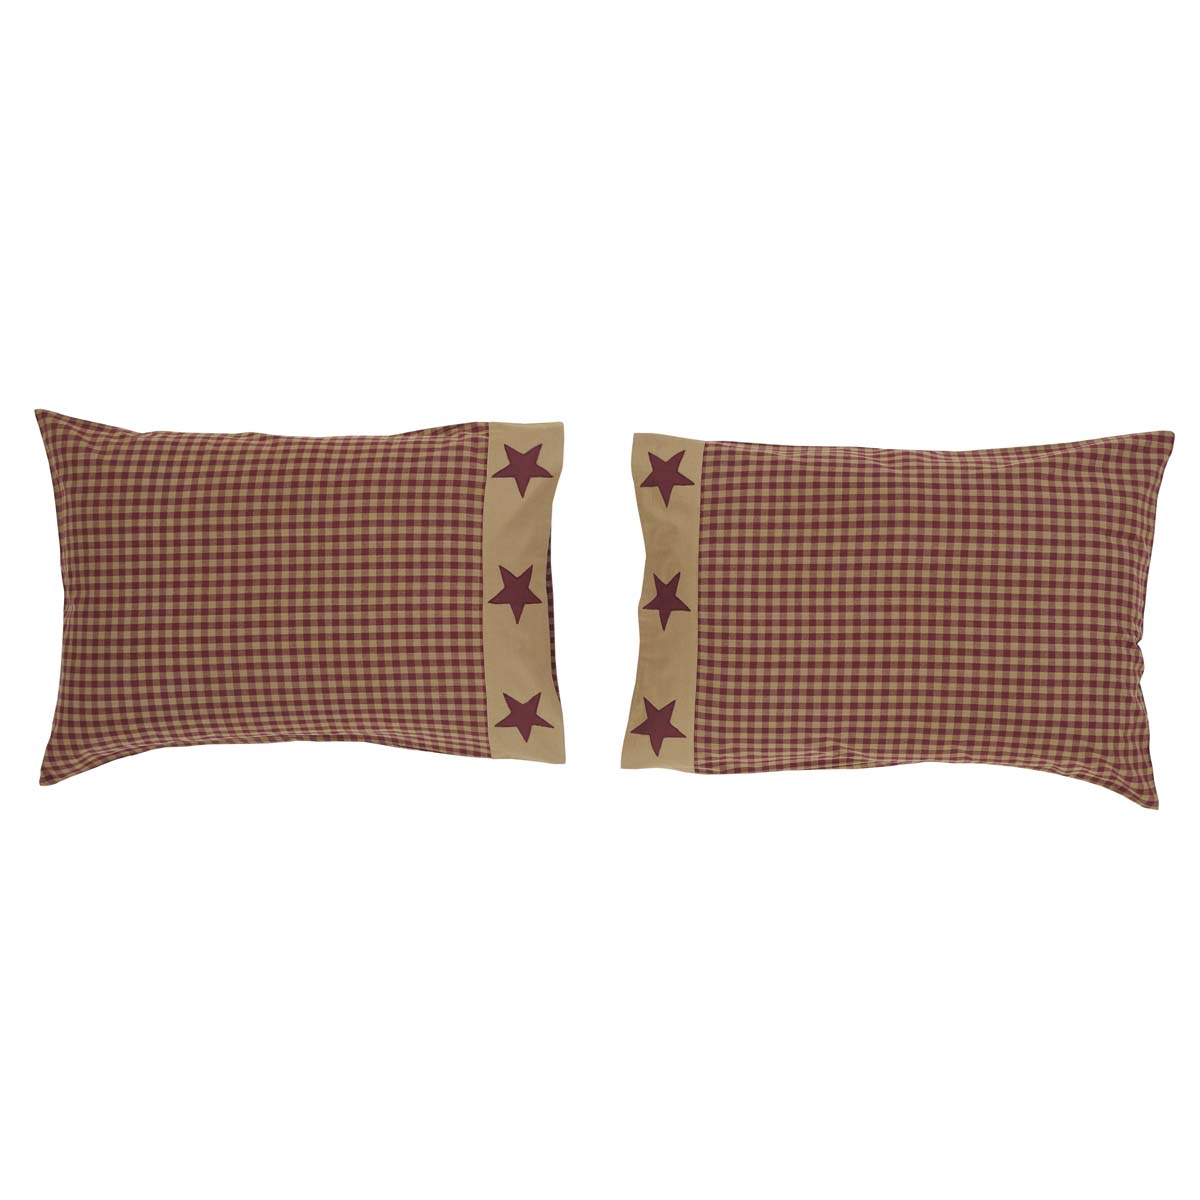 Ninepatch Star Standard Pillow Case w/Applique Border Set of 2 21x30 VHC Brands